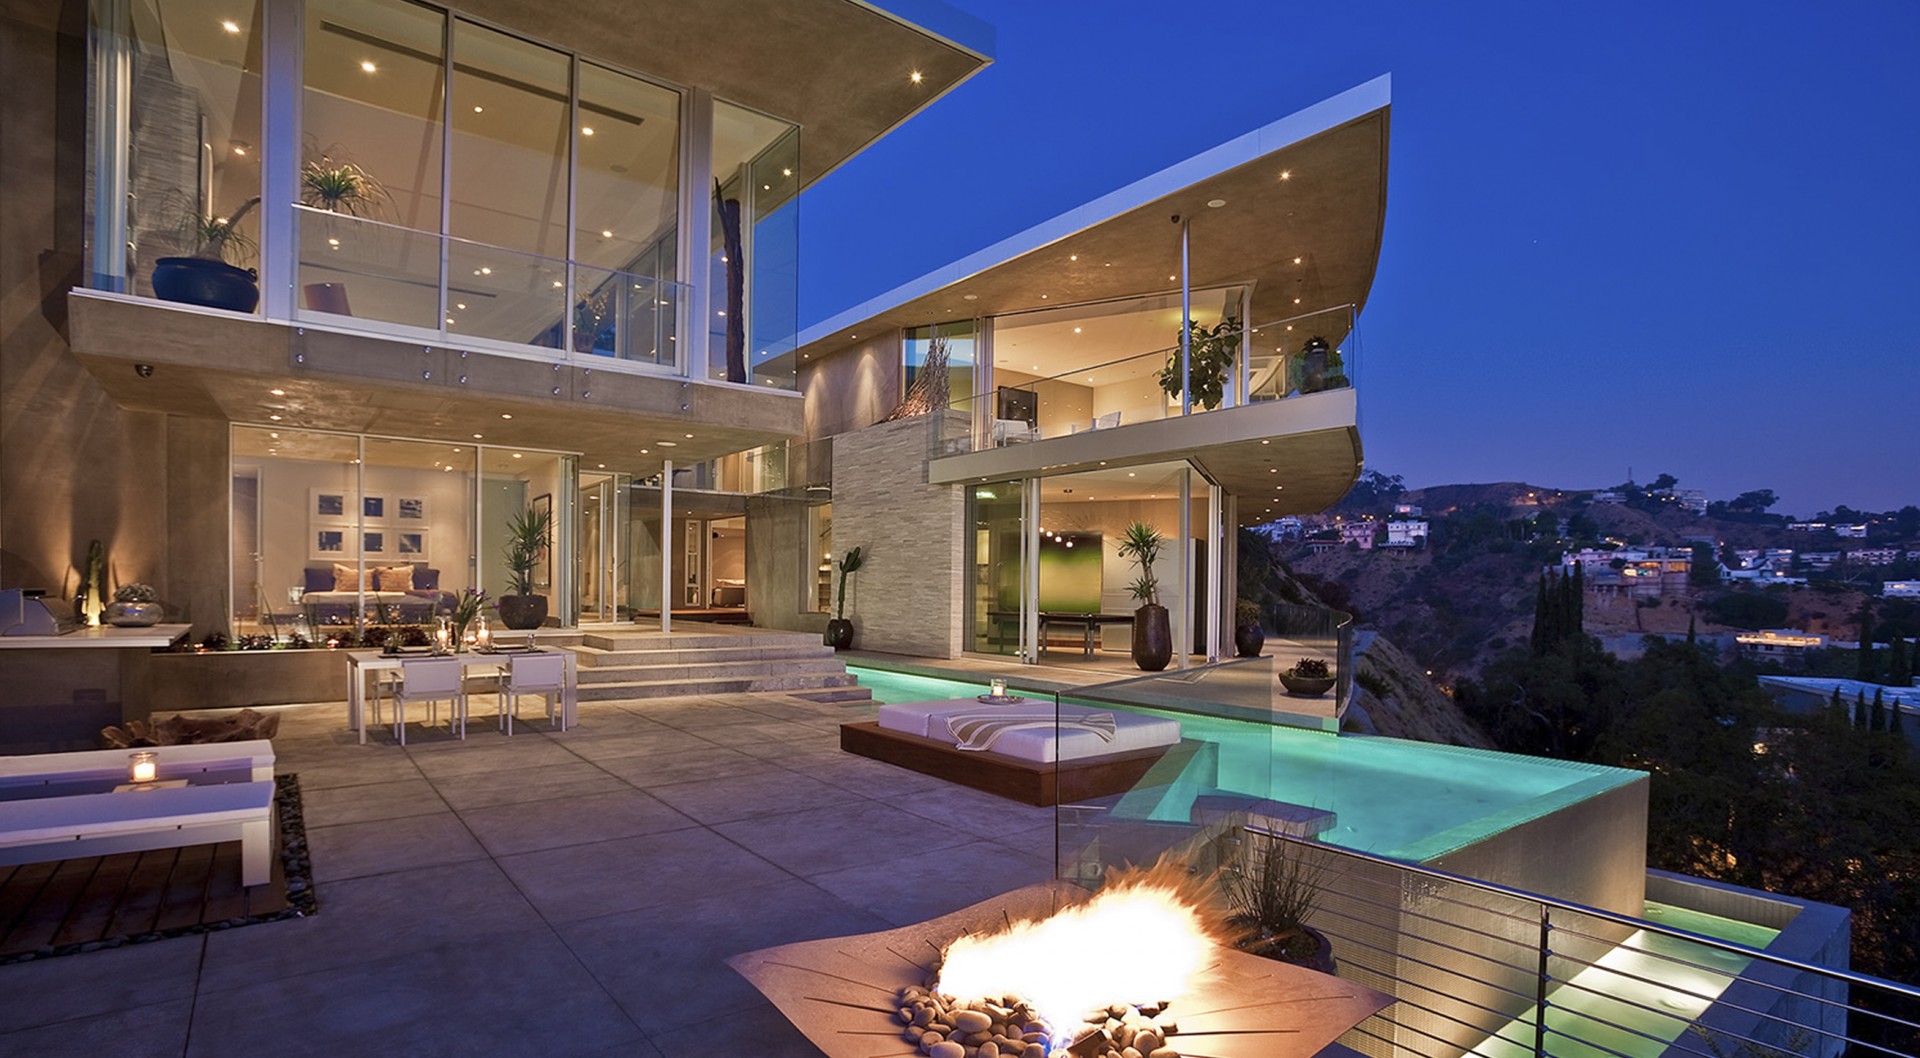 Avicii Buys A $15.5 Million Hollywood Hills Mansion | Celebrity Net Worth